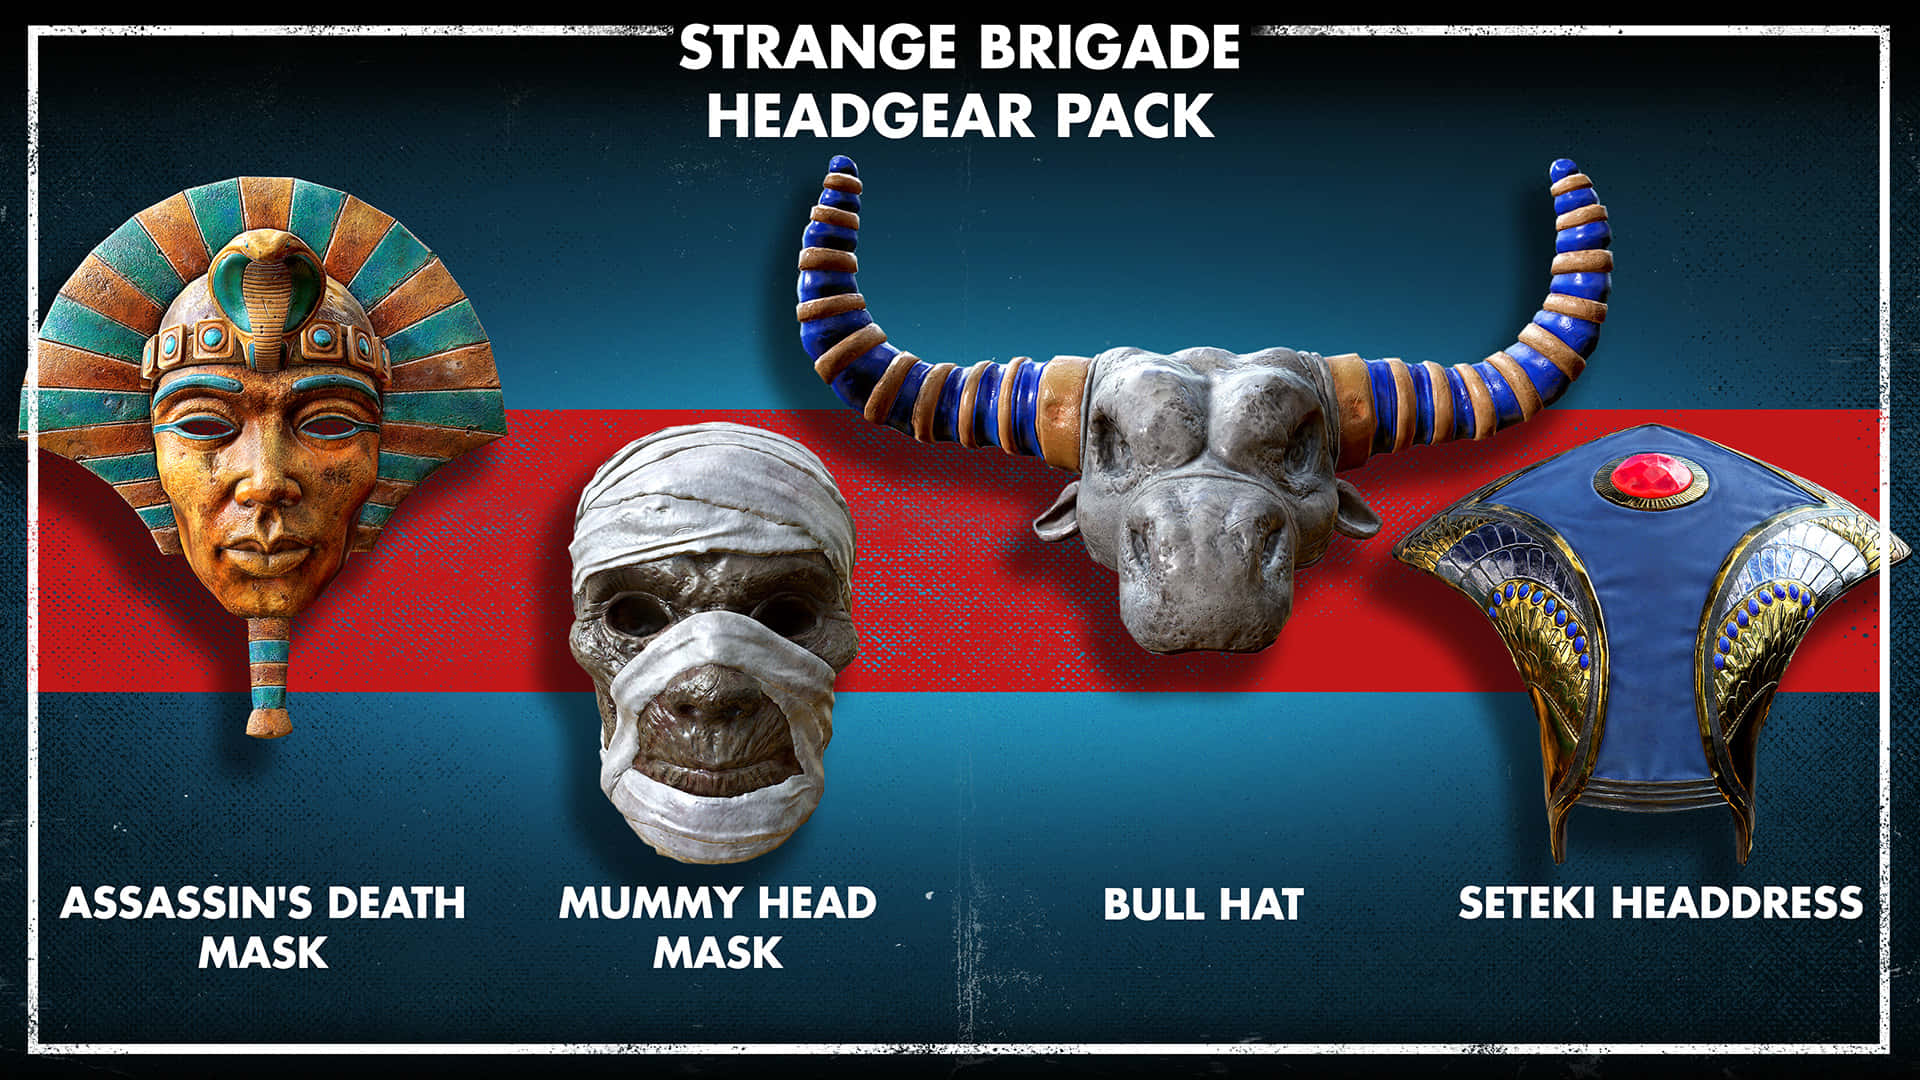 An Epic Display Of The Strange Brigade Adventure